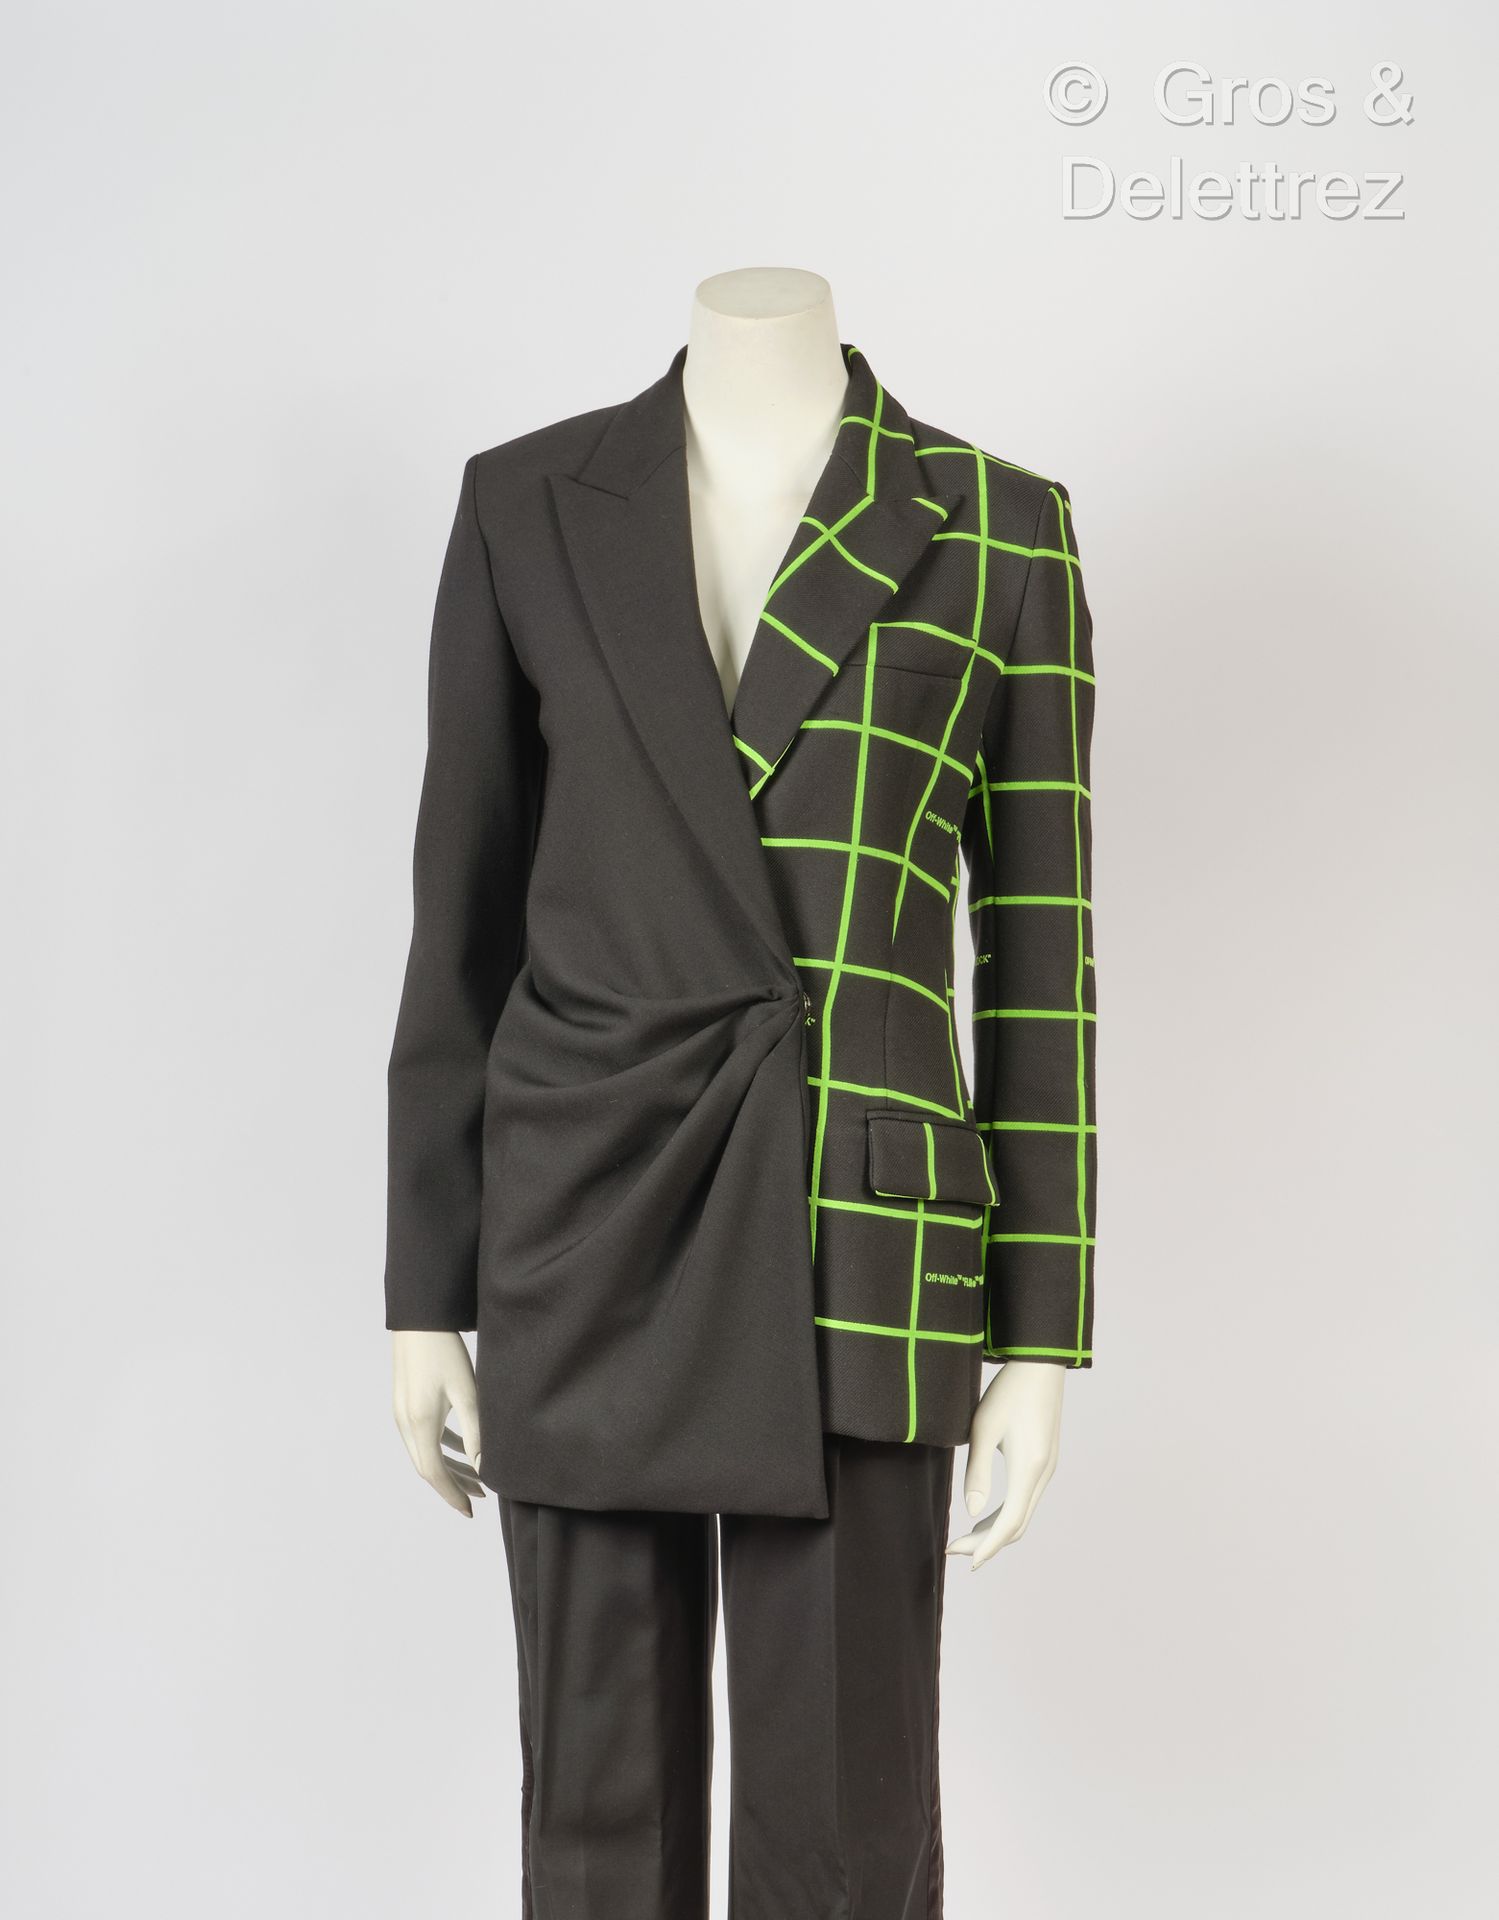 OFF-WHITE Tailoring par Virgil Abloh 2019-2020年秋/冬系列
黑色针织衫和黑色羊毛的不对称两件套外套，带有霓虹绿色的&hellip;